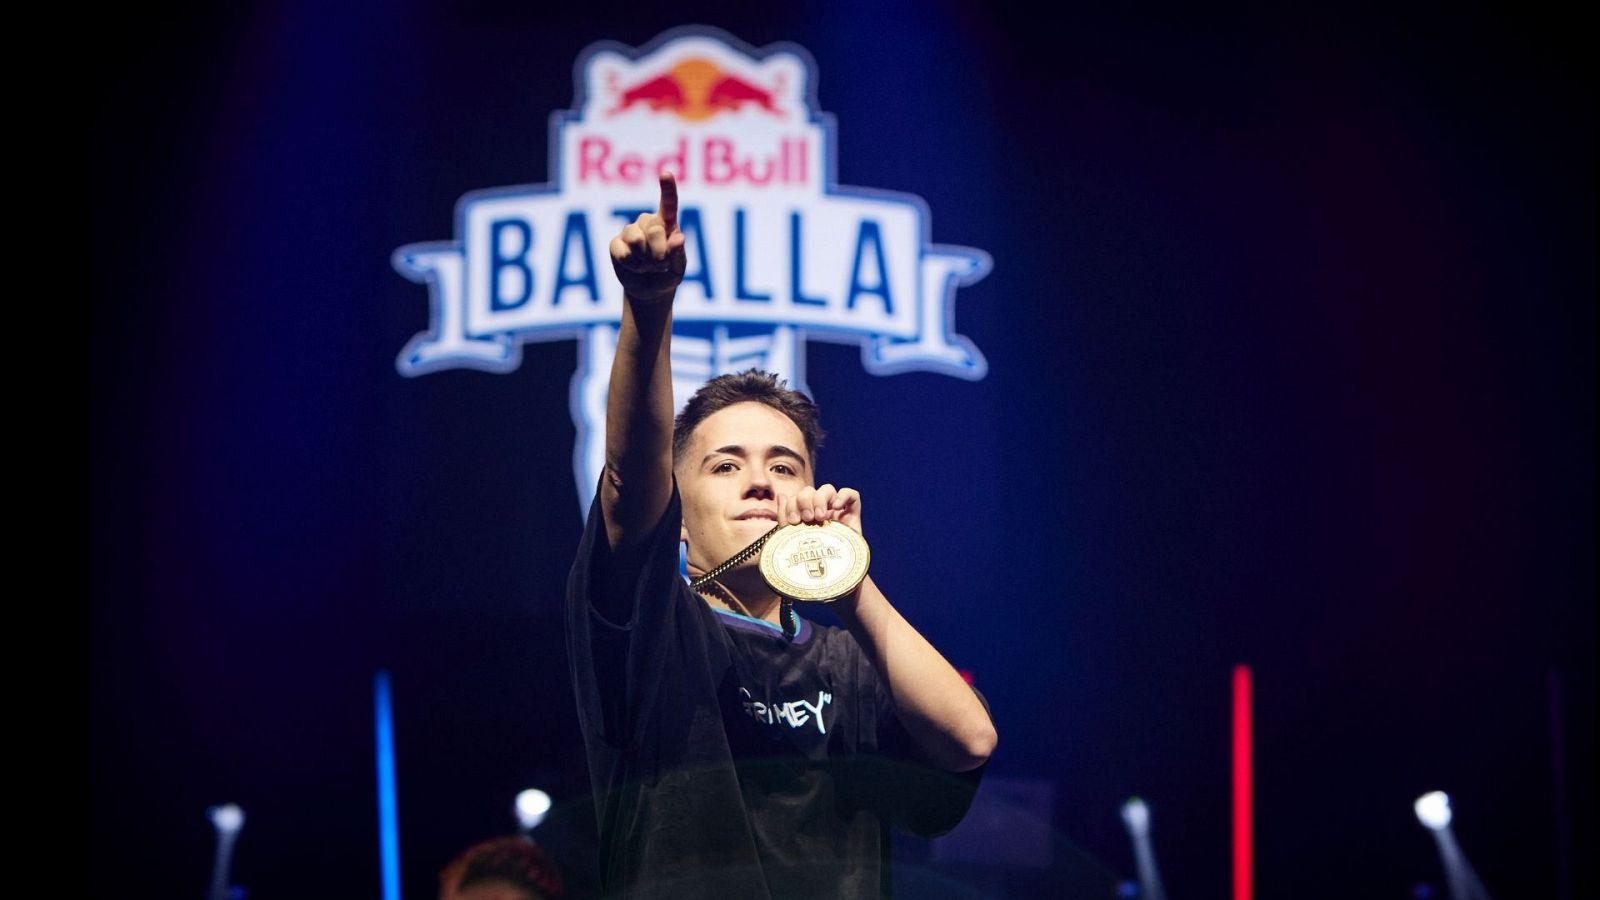 Gazir, campeón de la Red Bull Batalla 2021